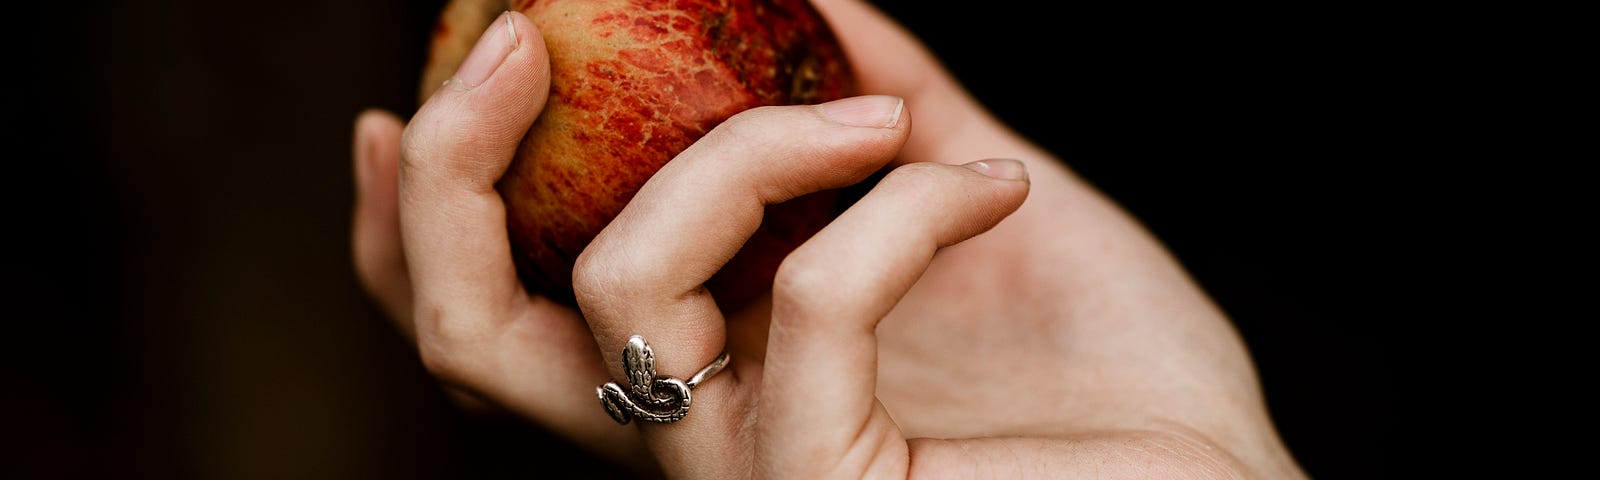 A woman’s hand offering an apple